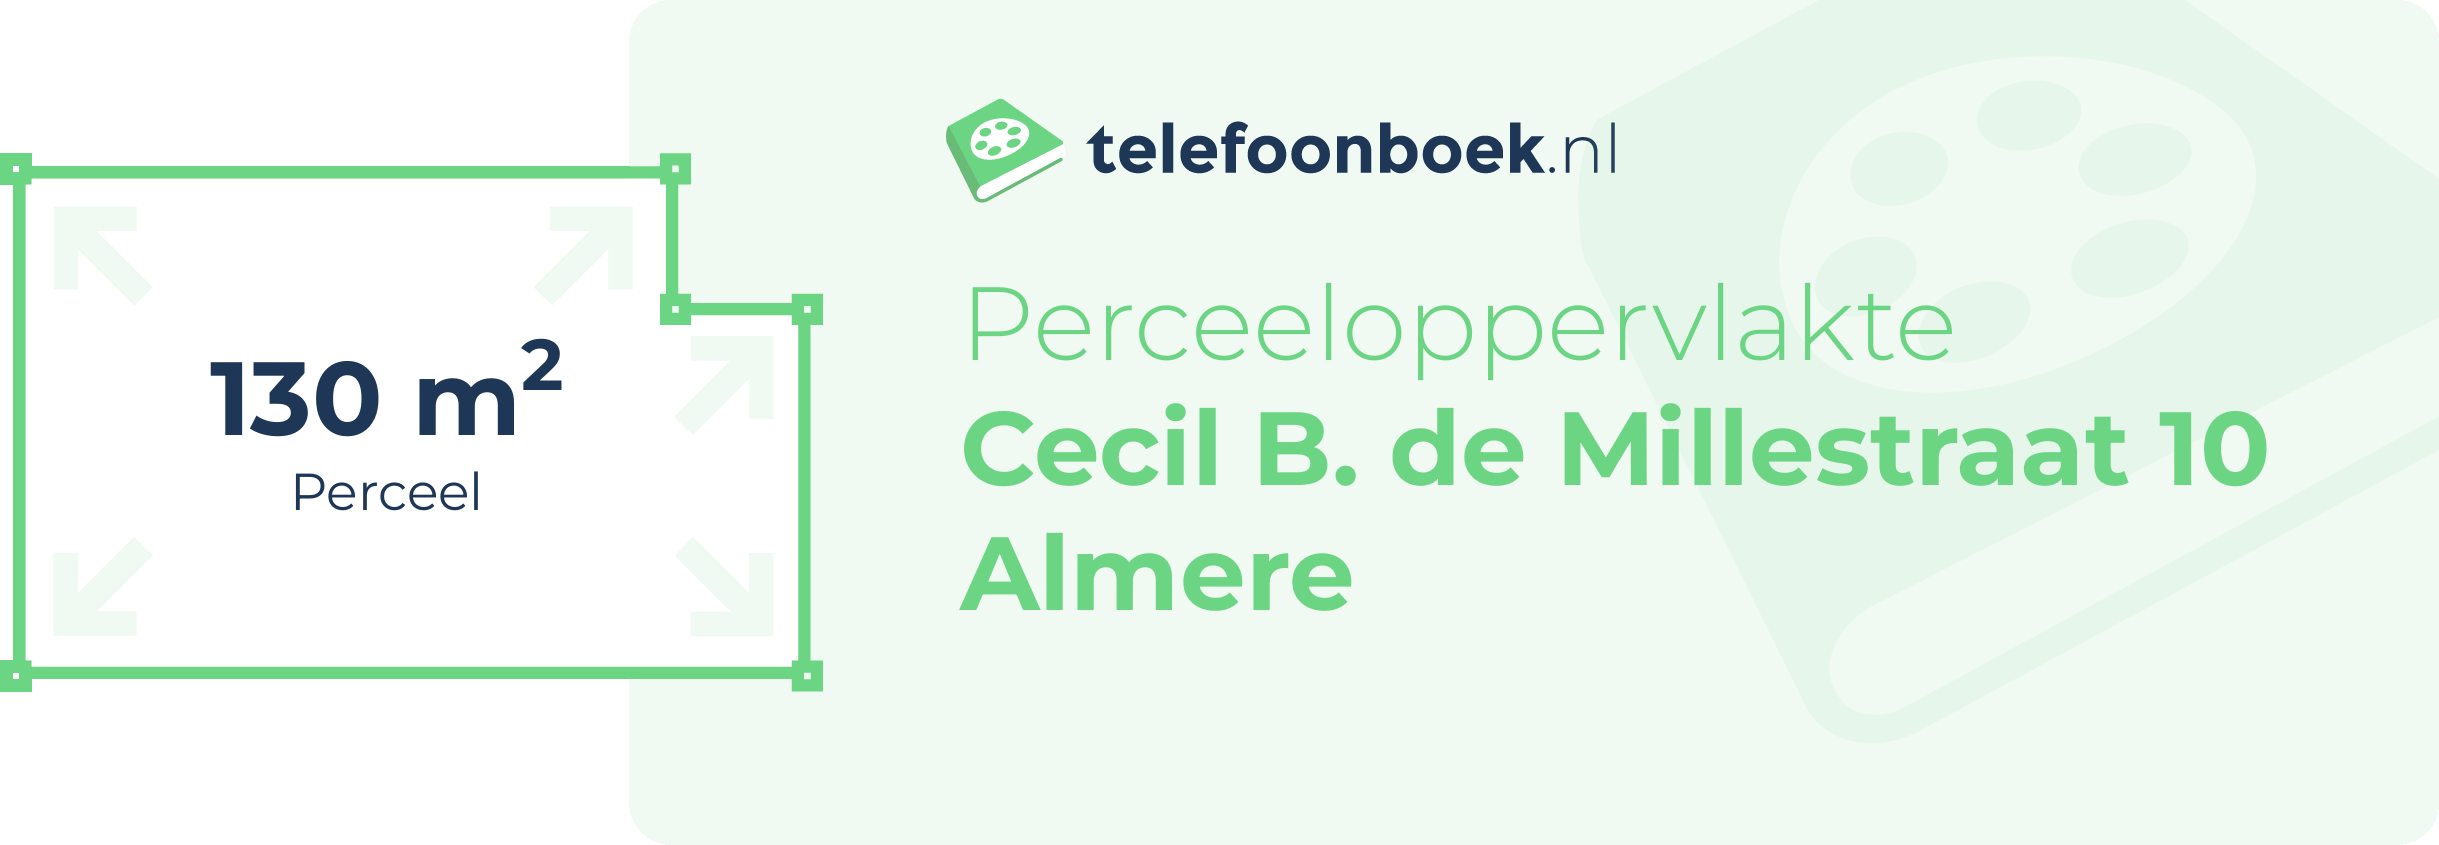 Perceeloppervlakte Cecil B. De Millestraat 10 Almere